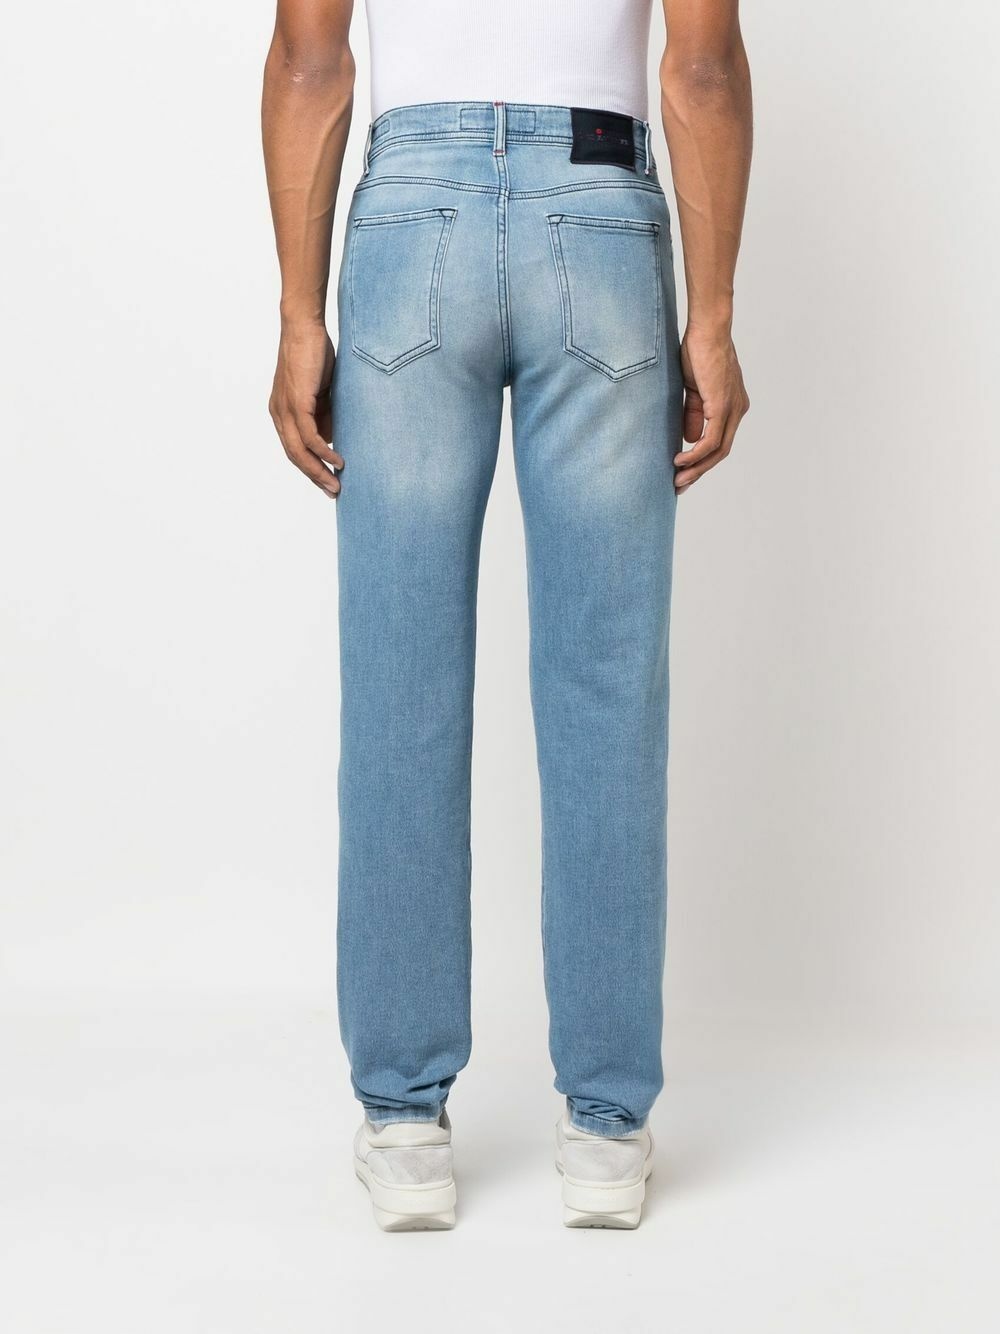 KITON - Stretch Cotton Slim Fit Jeans Kiton